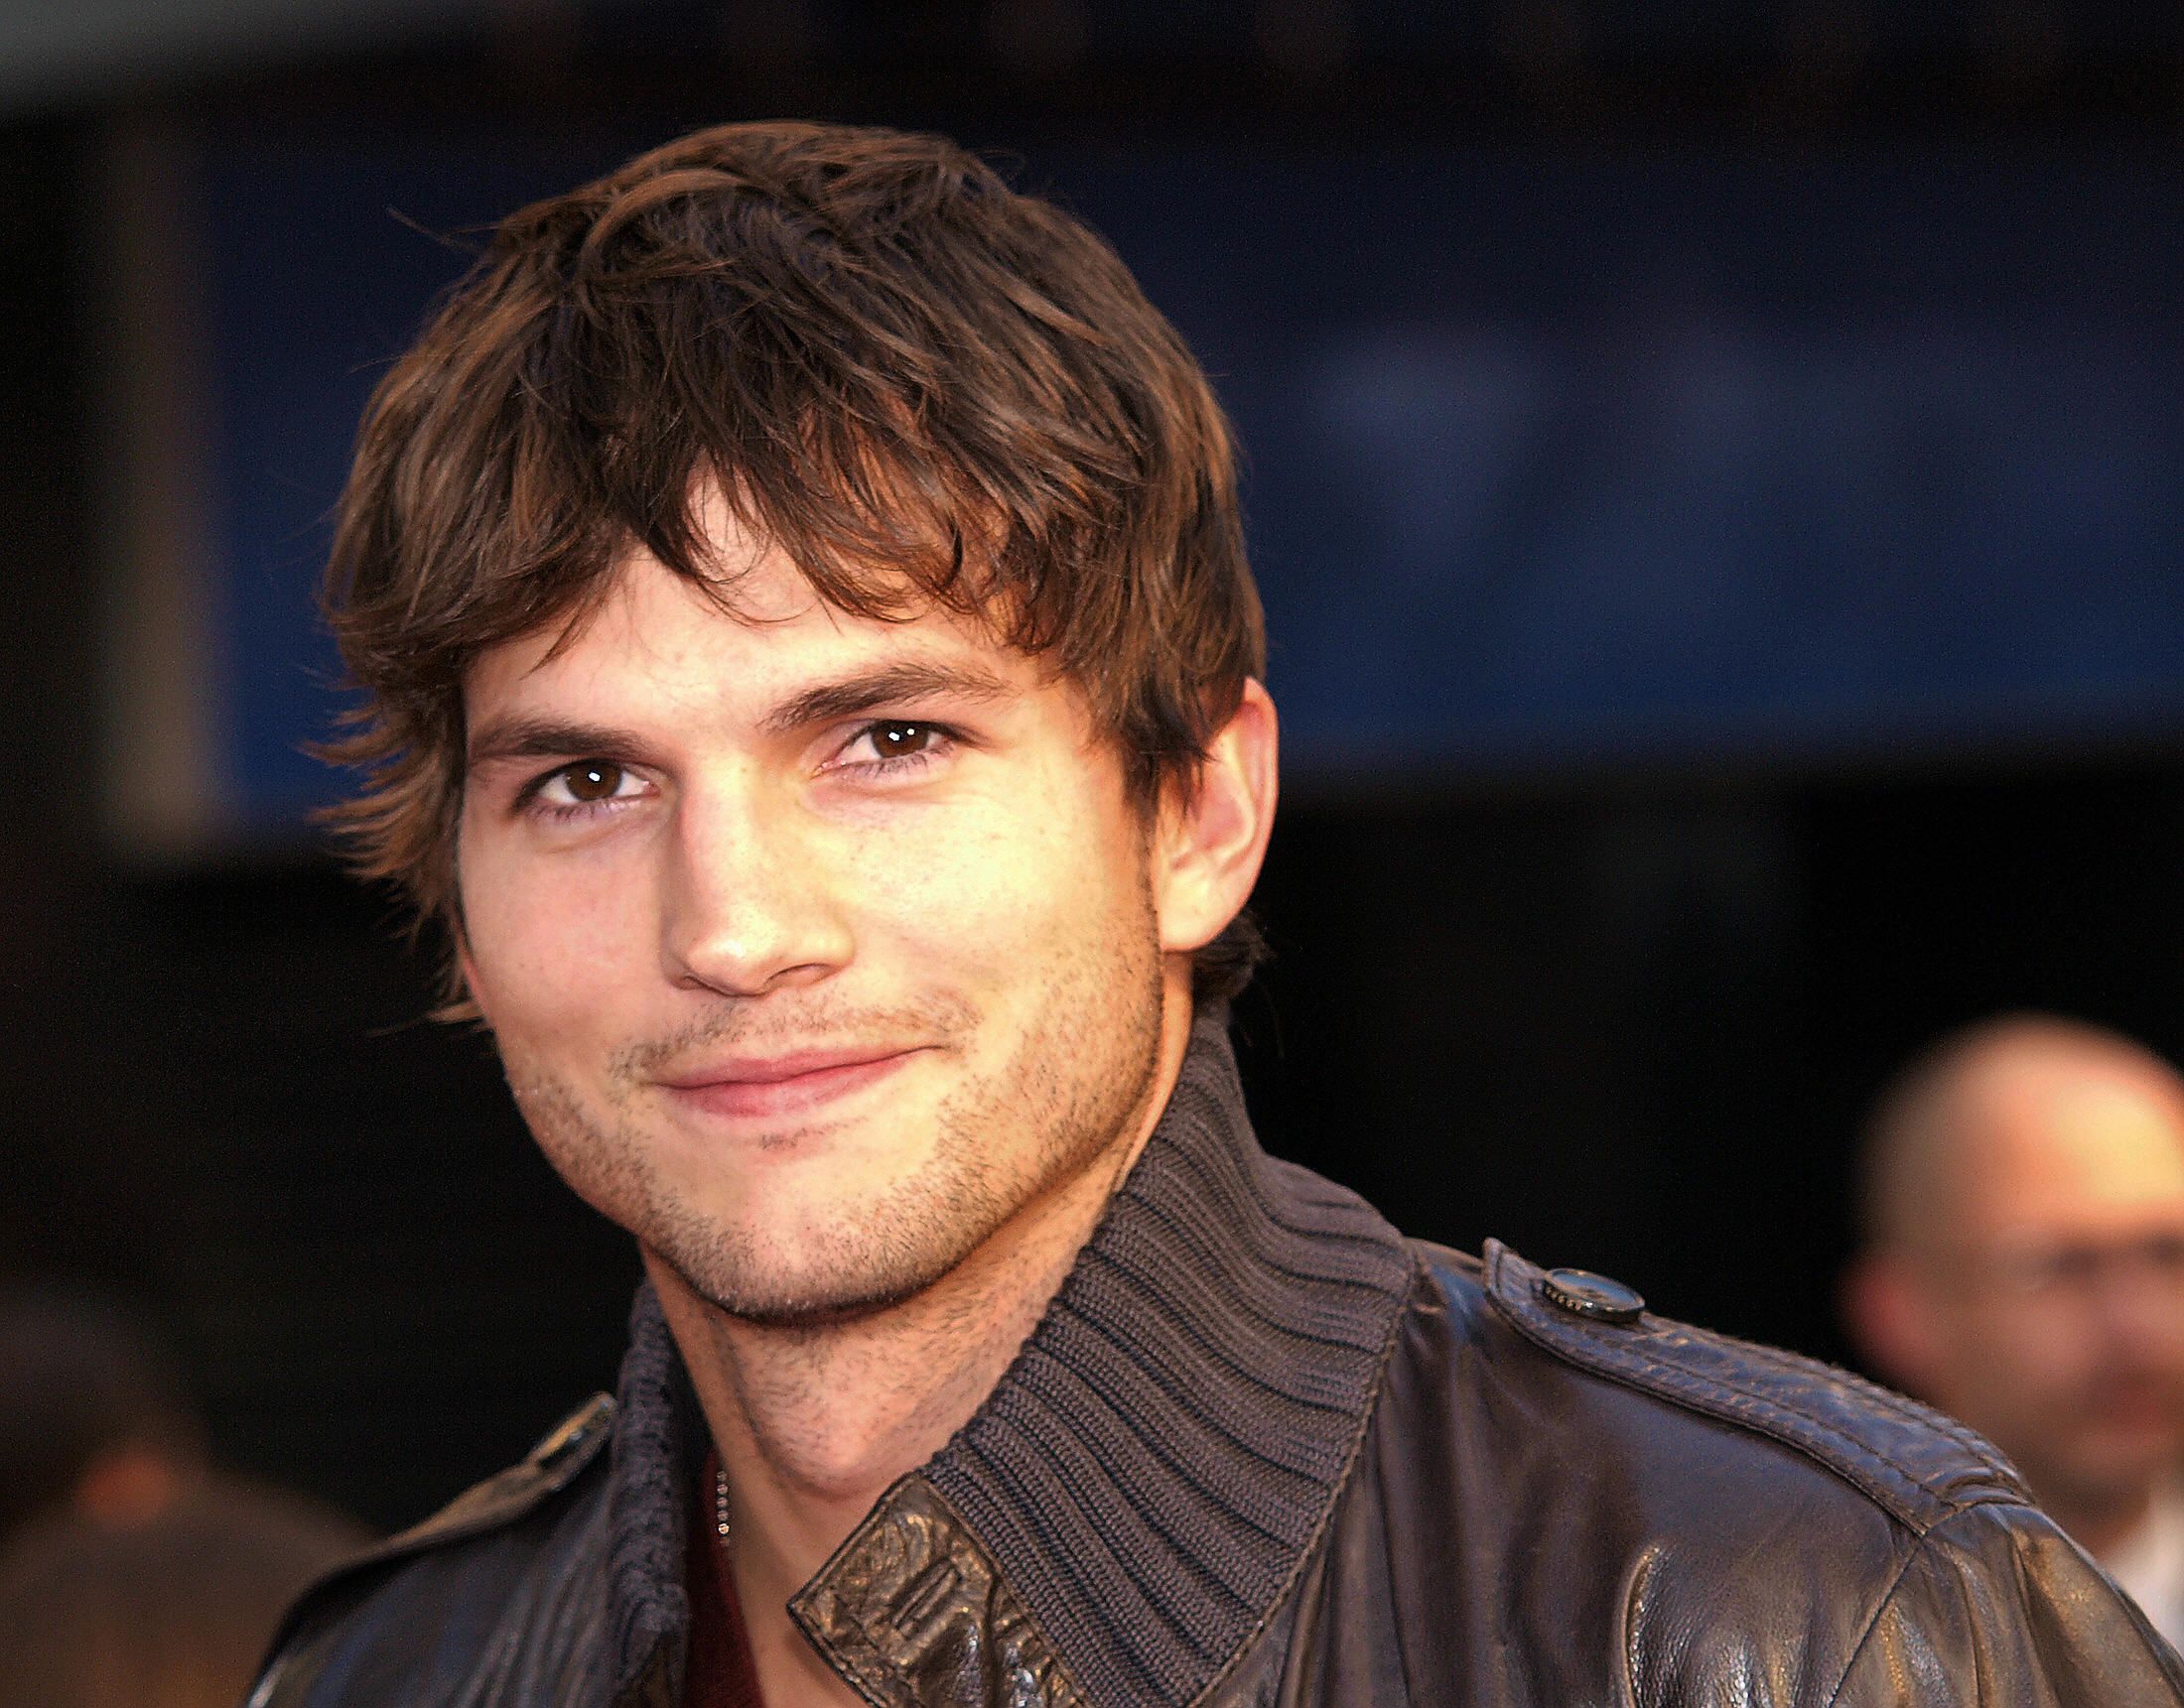 Ashton Kutcher's Hollywood Evolution - Ashton Kutcher's Life in Photos